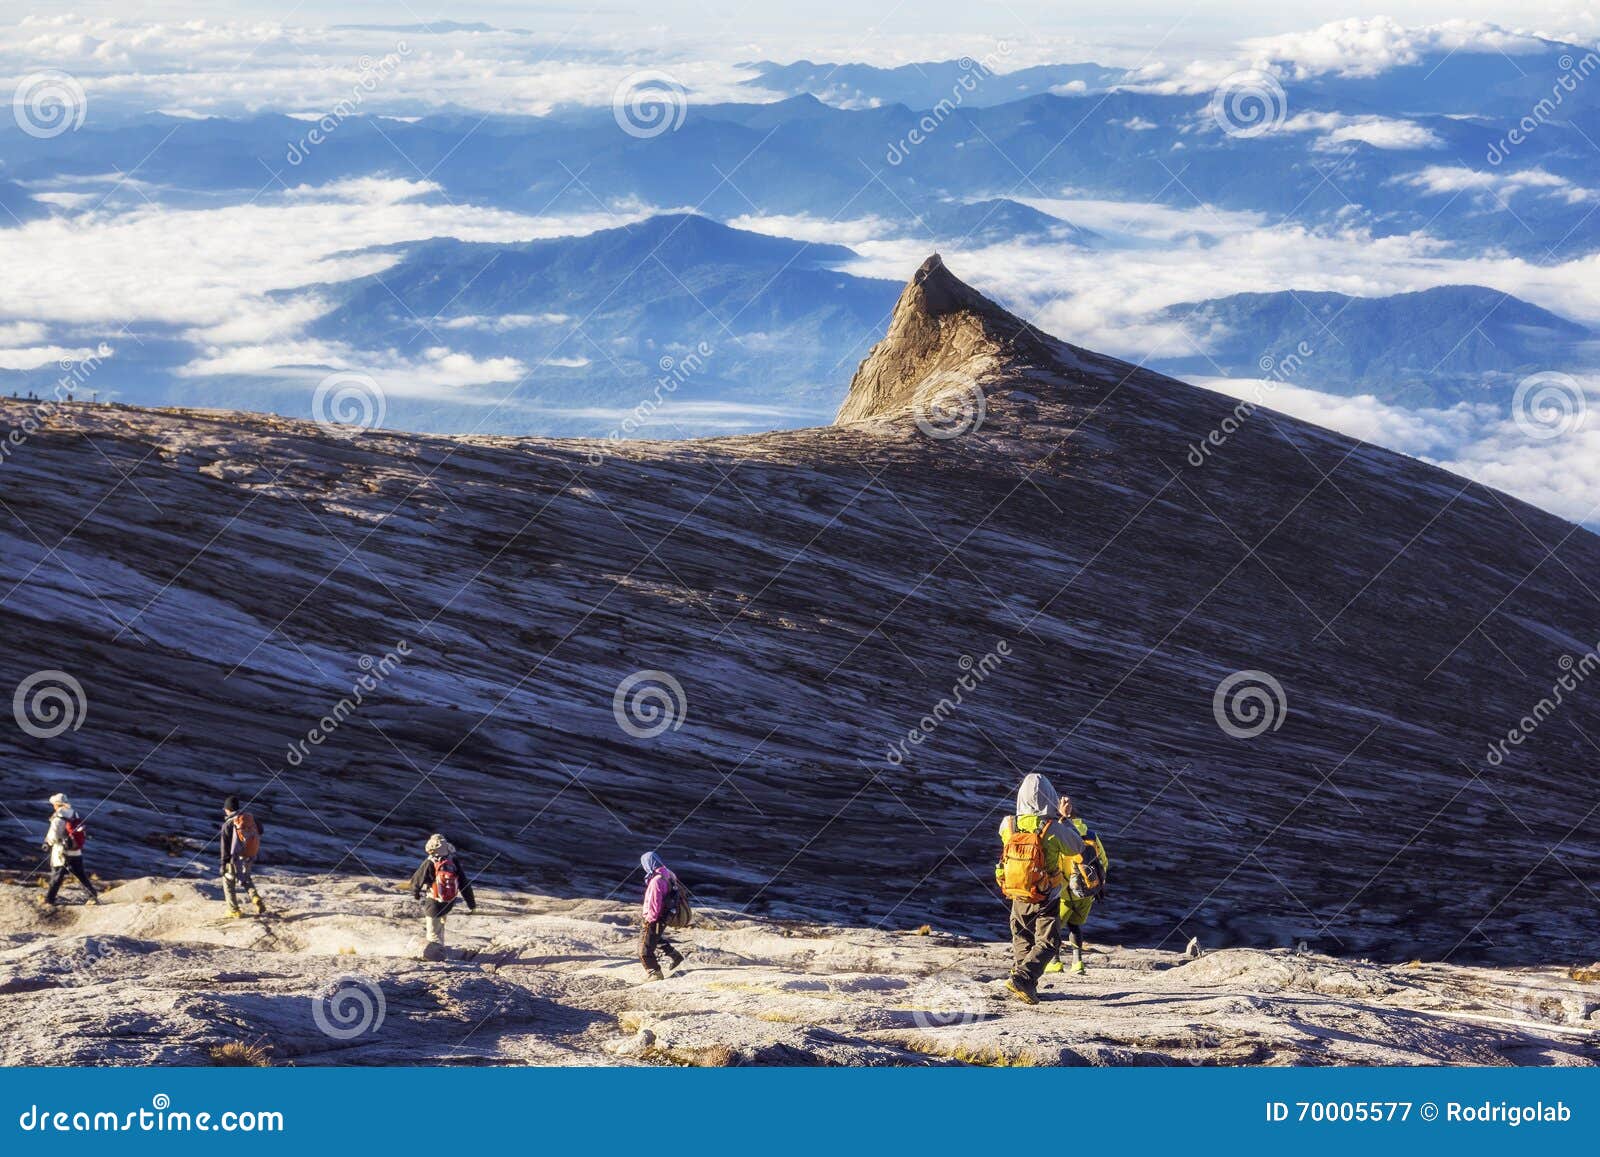 hikers at the top of mount kinabalu in sabah, malaysia